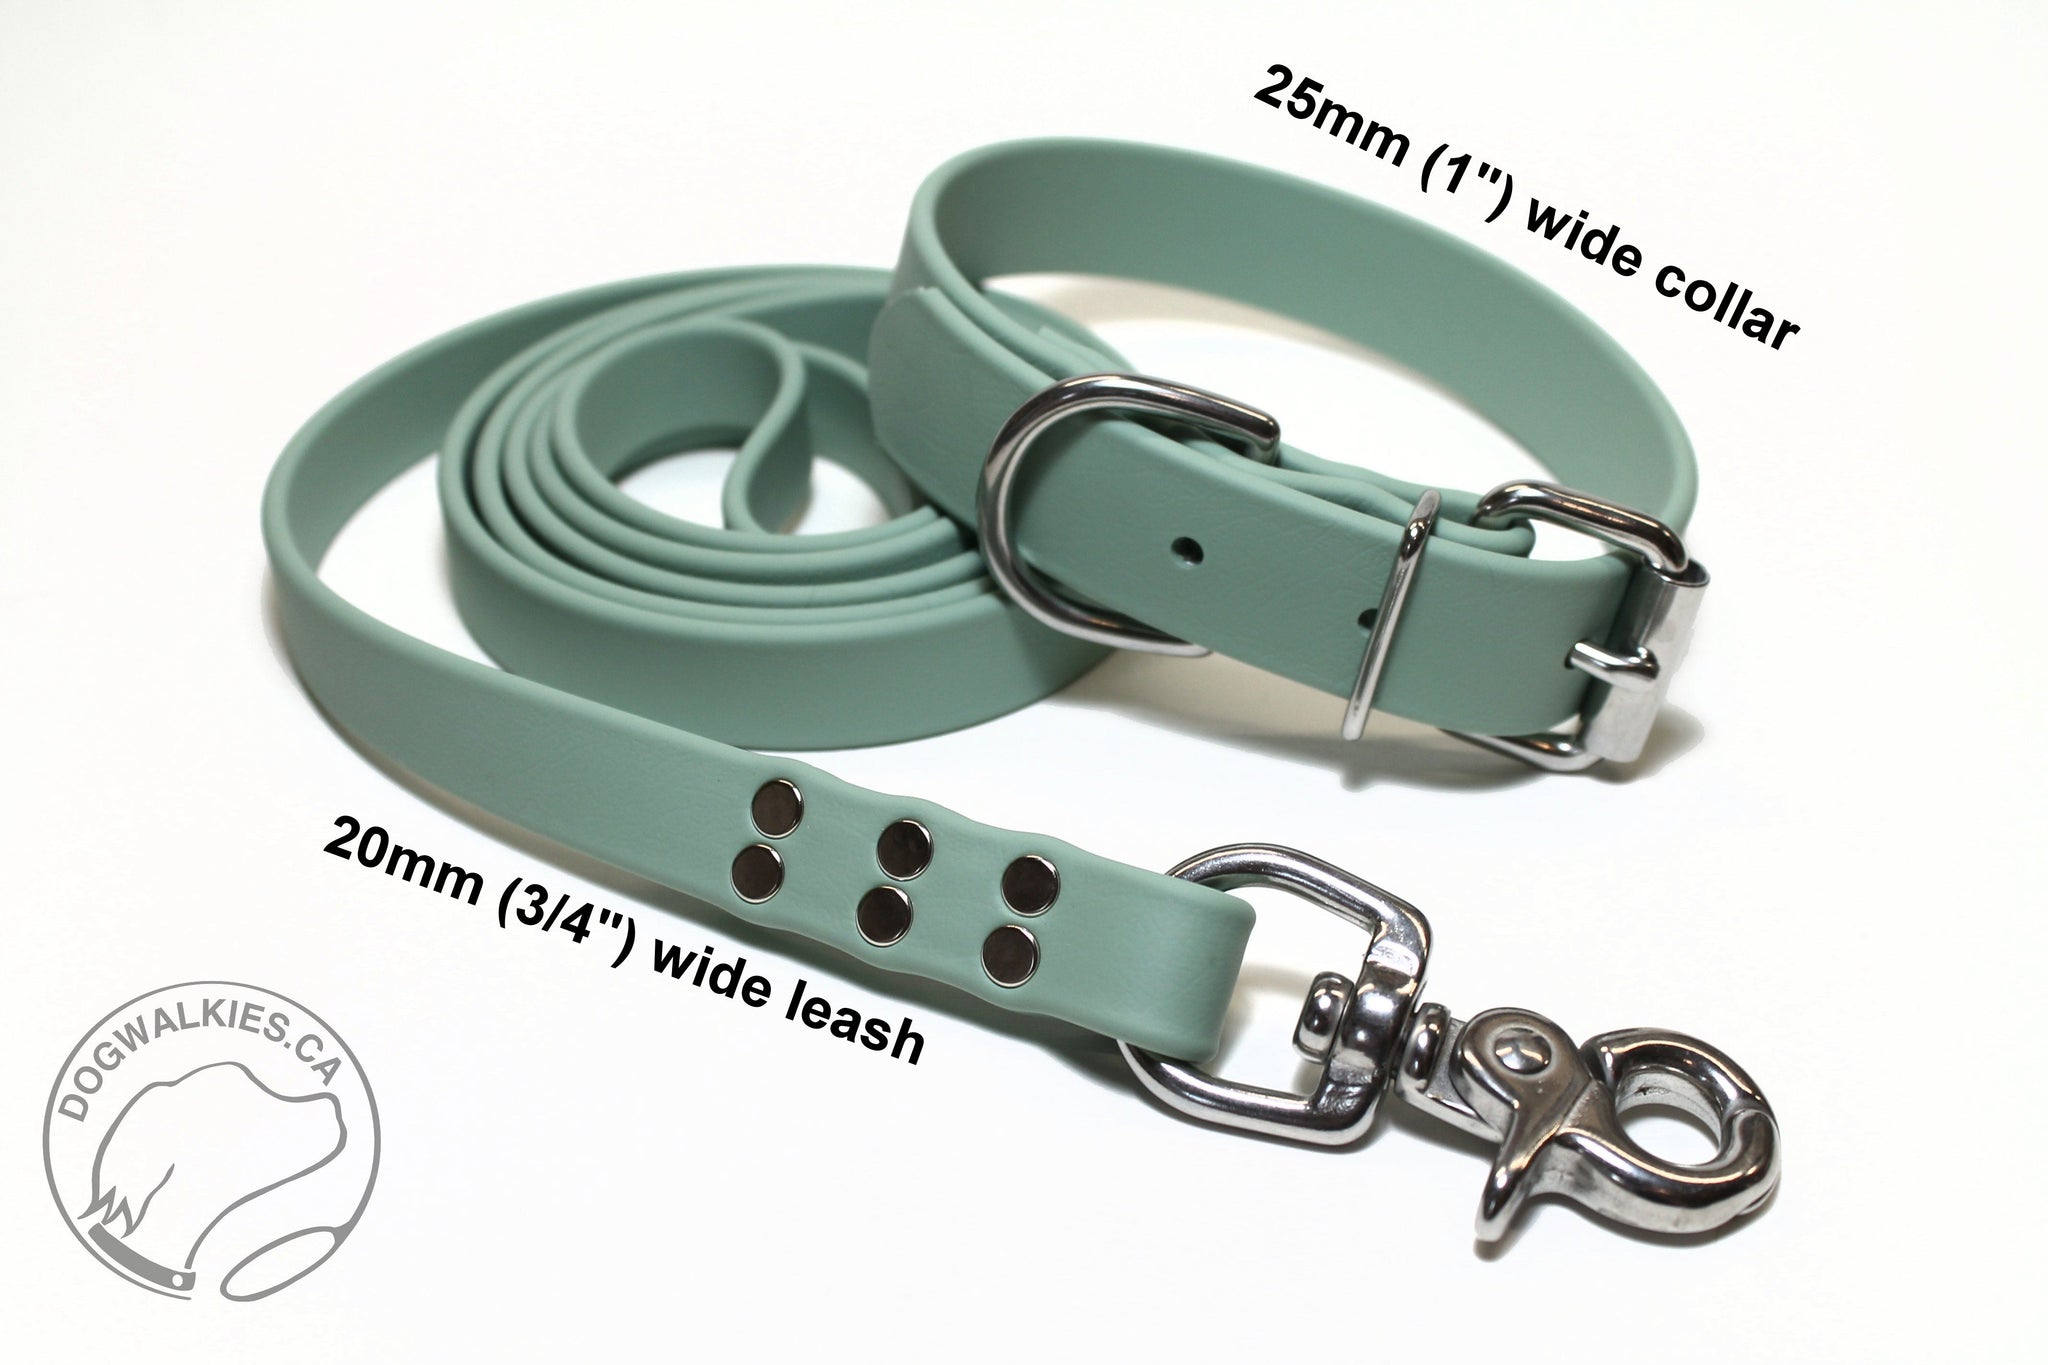 NEW Sage Green Biothane Dog Collar - 1 inch (25mm) wide